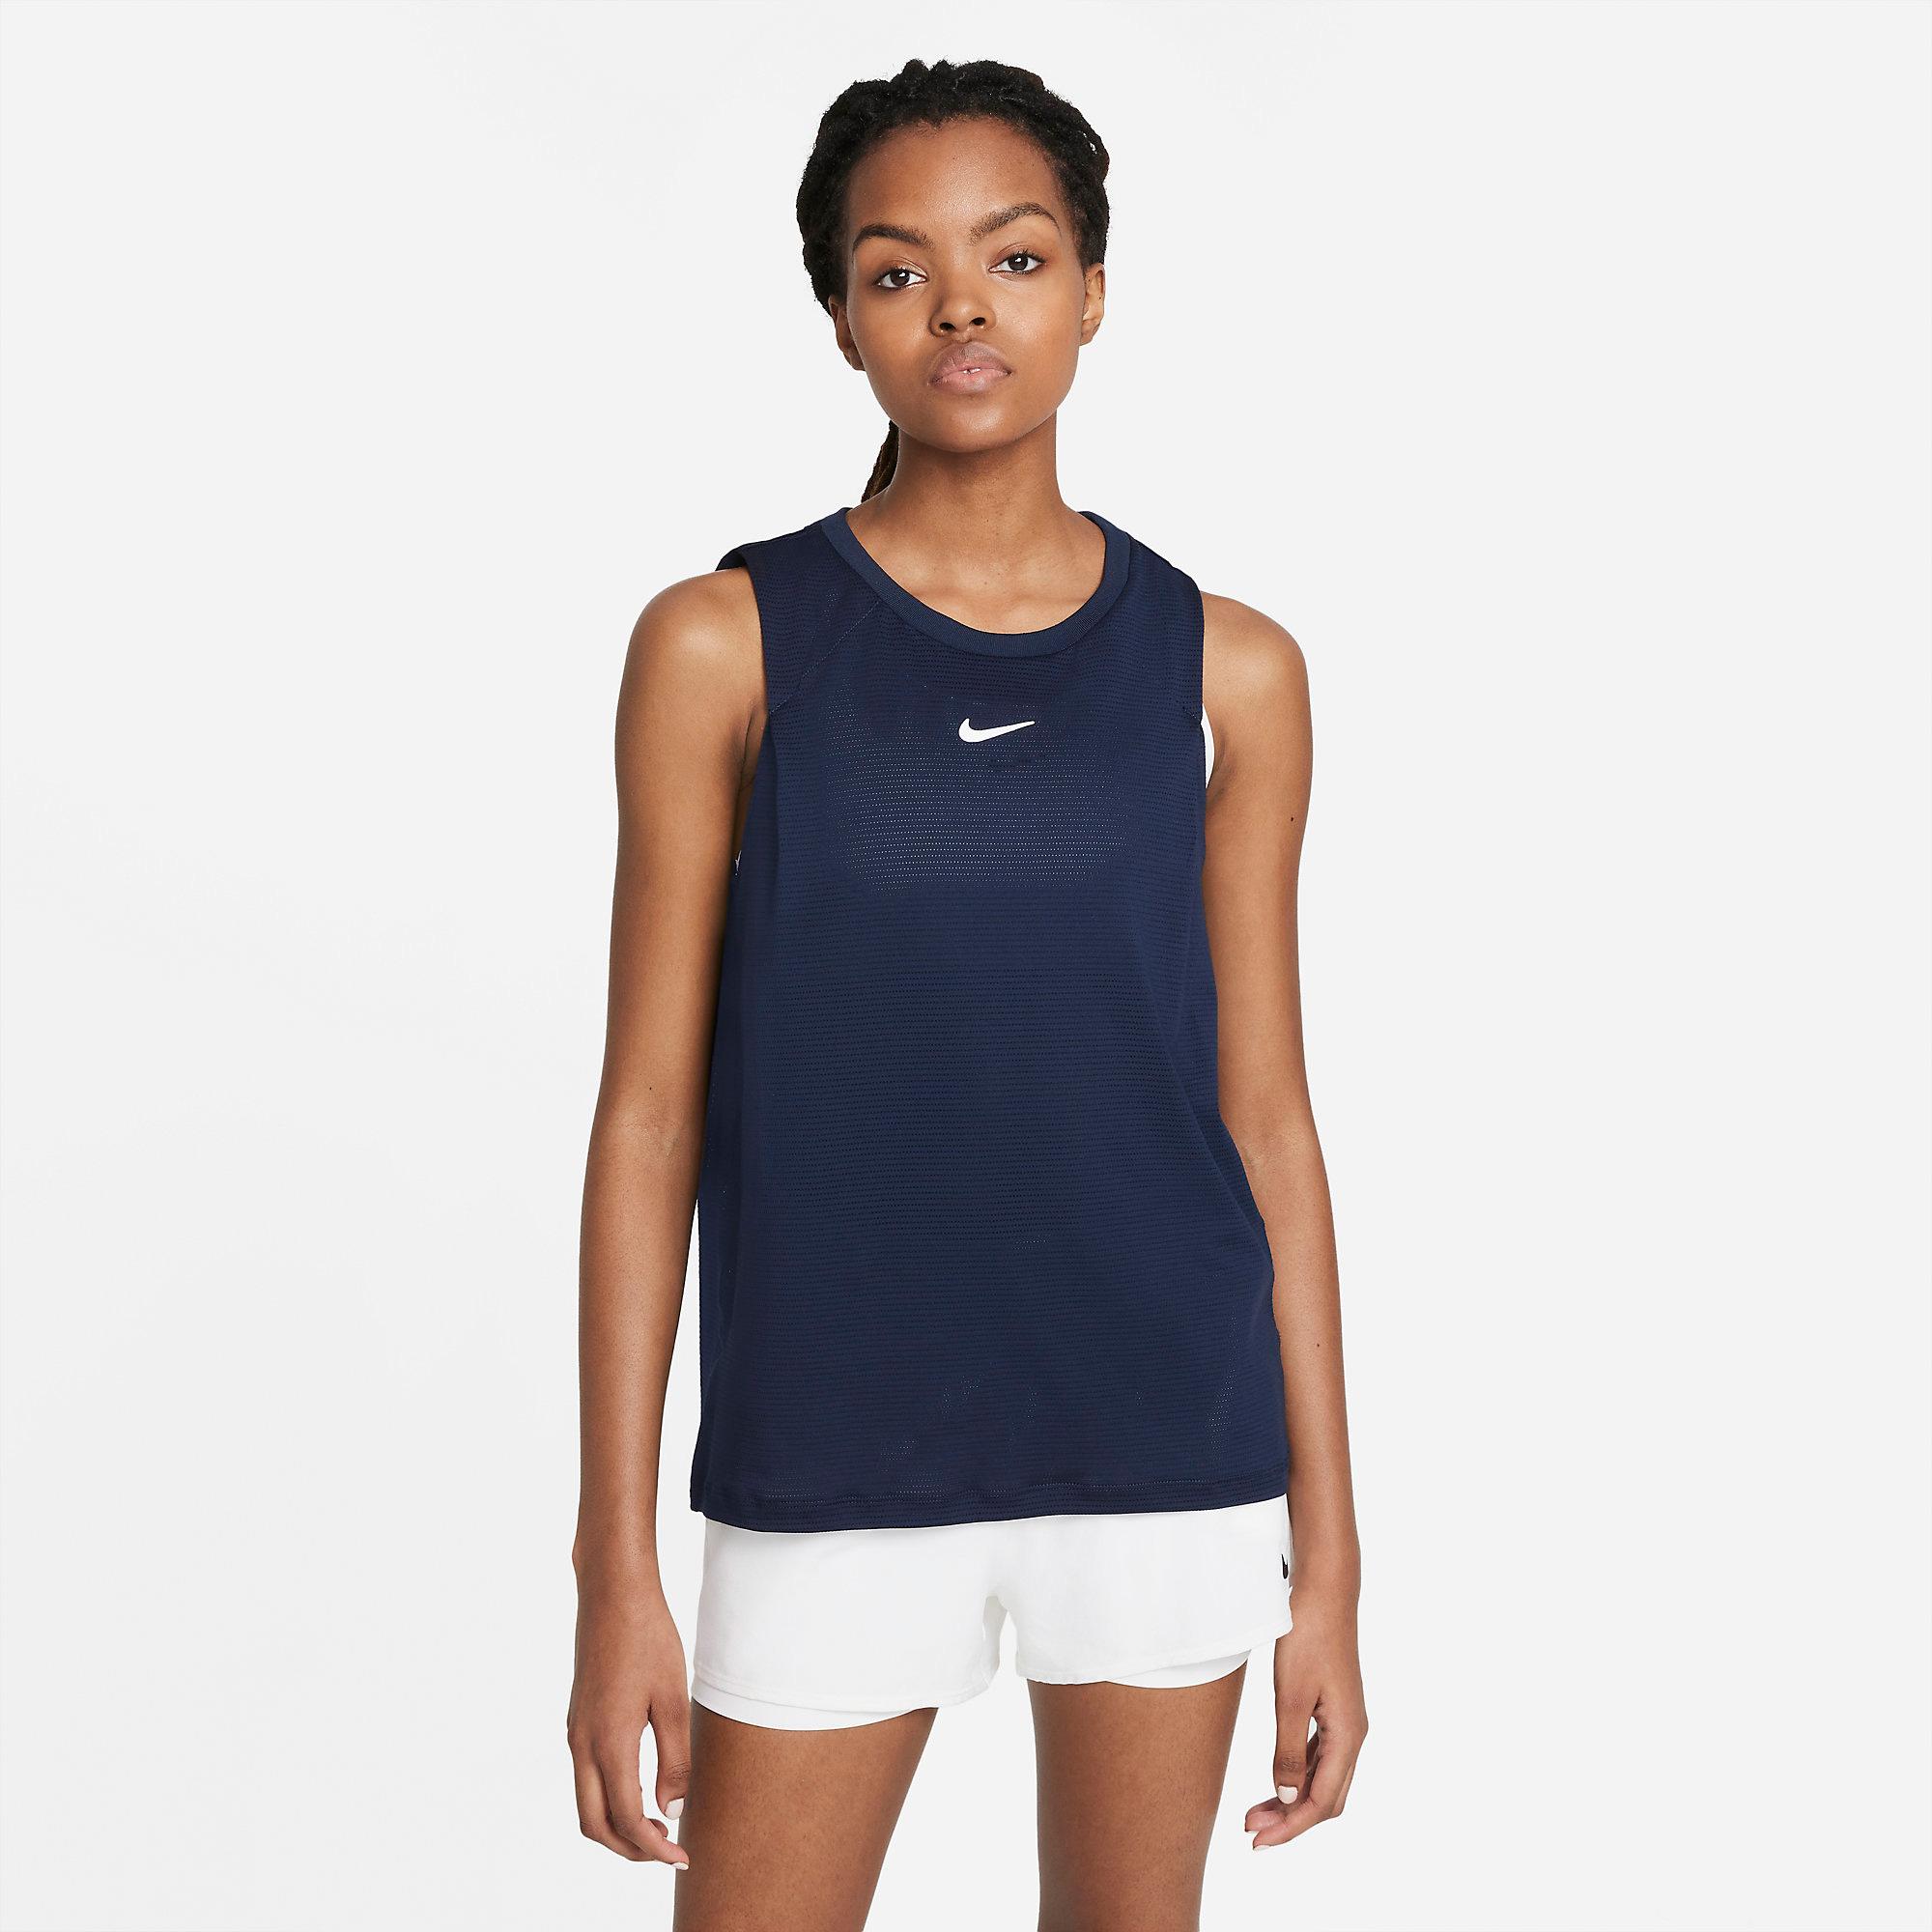 Nike Womens Advantage Tennis Tank - Navy Blue - Tennisnuts.com